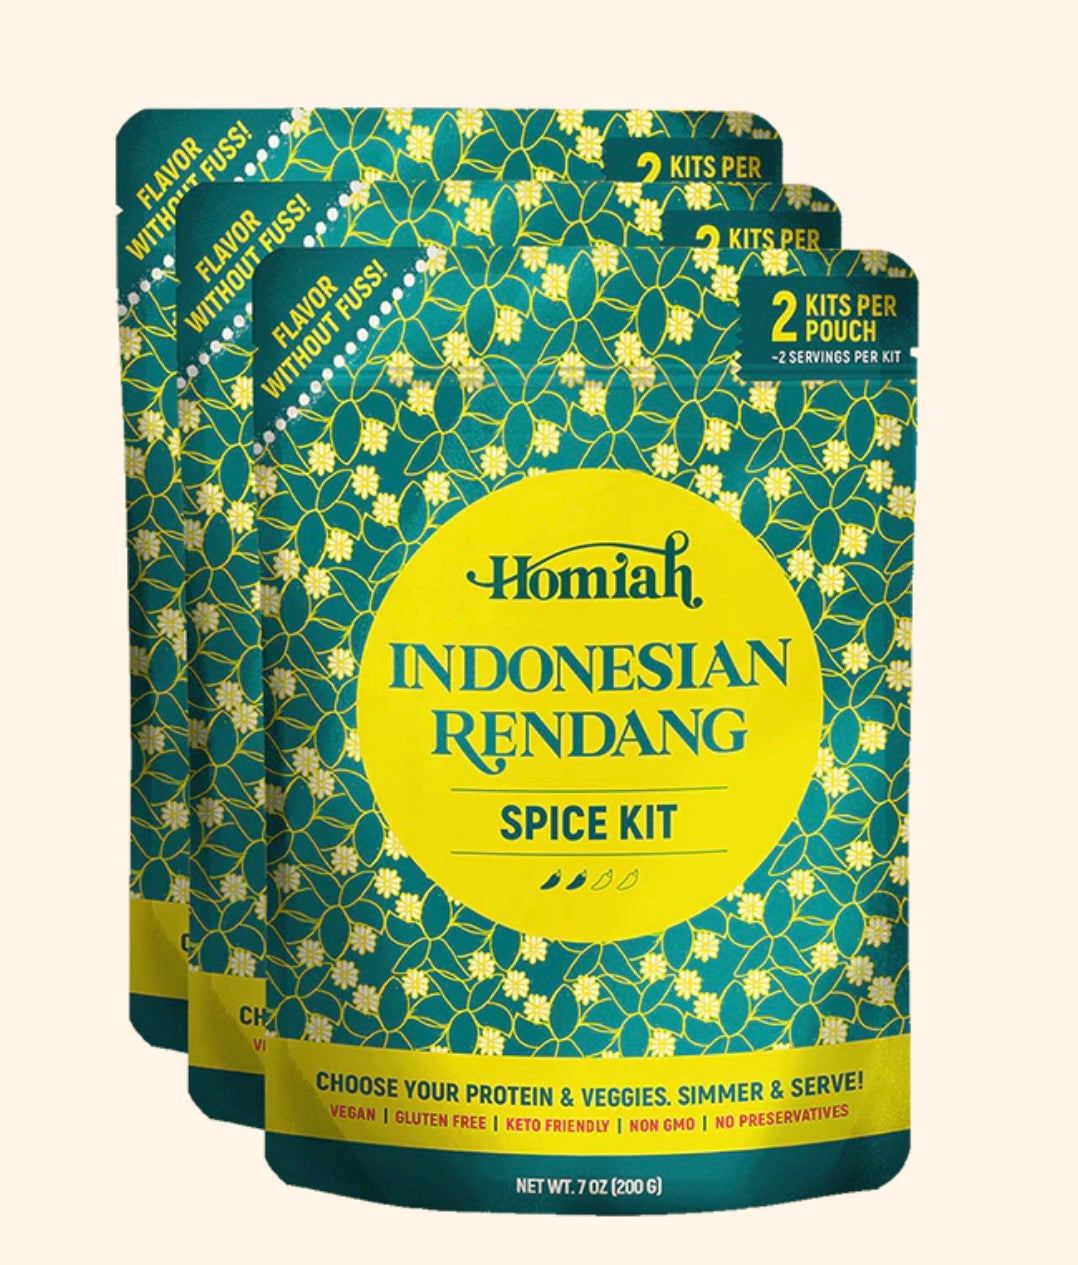 Homiah Indonesian Rendang Spice Kit